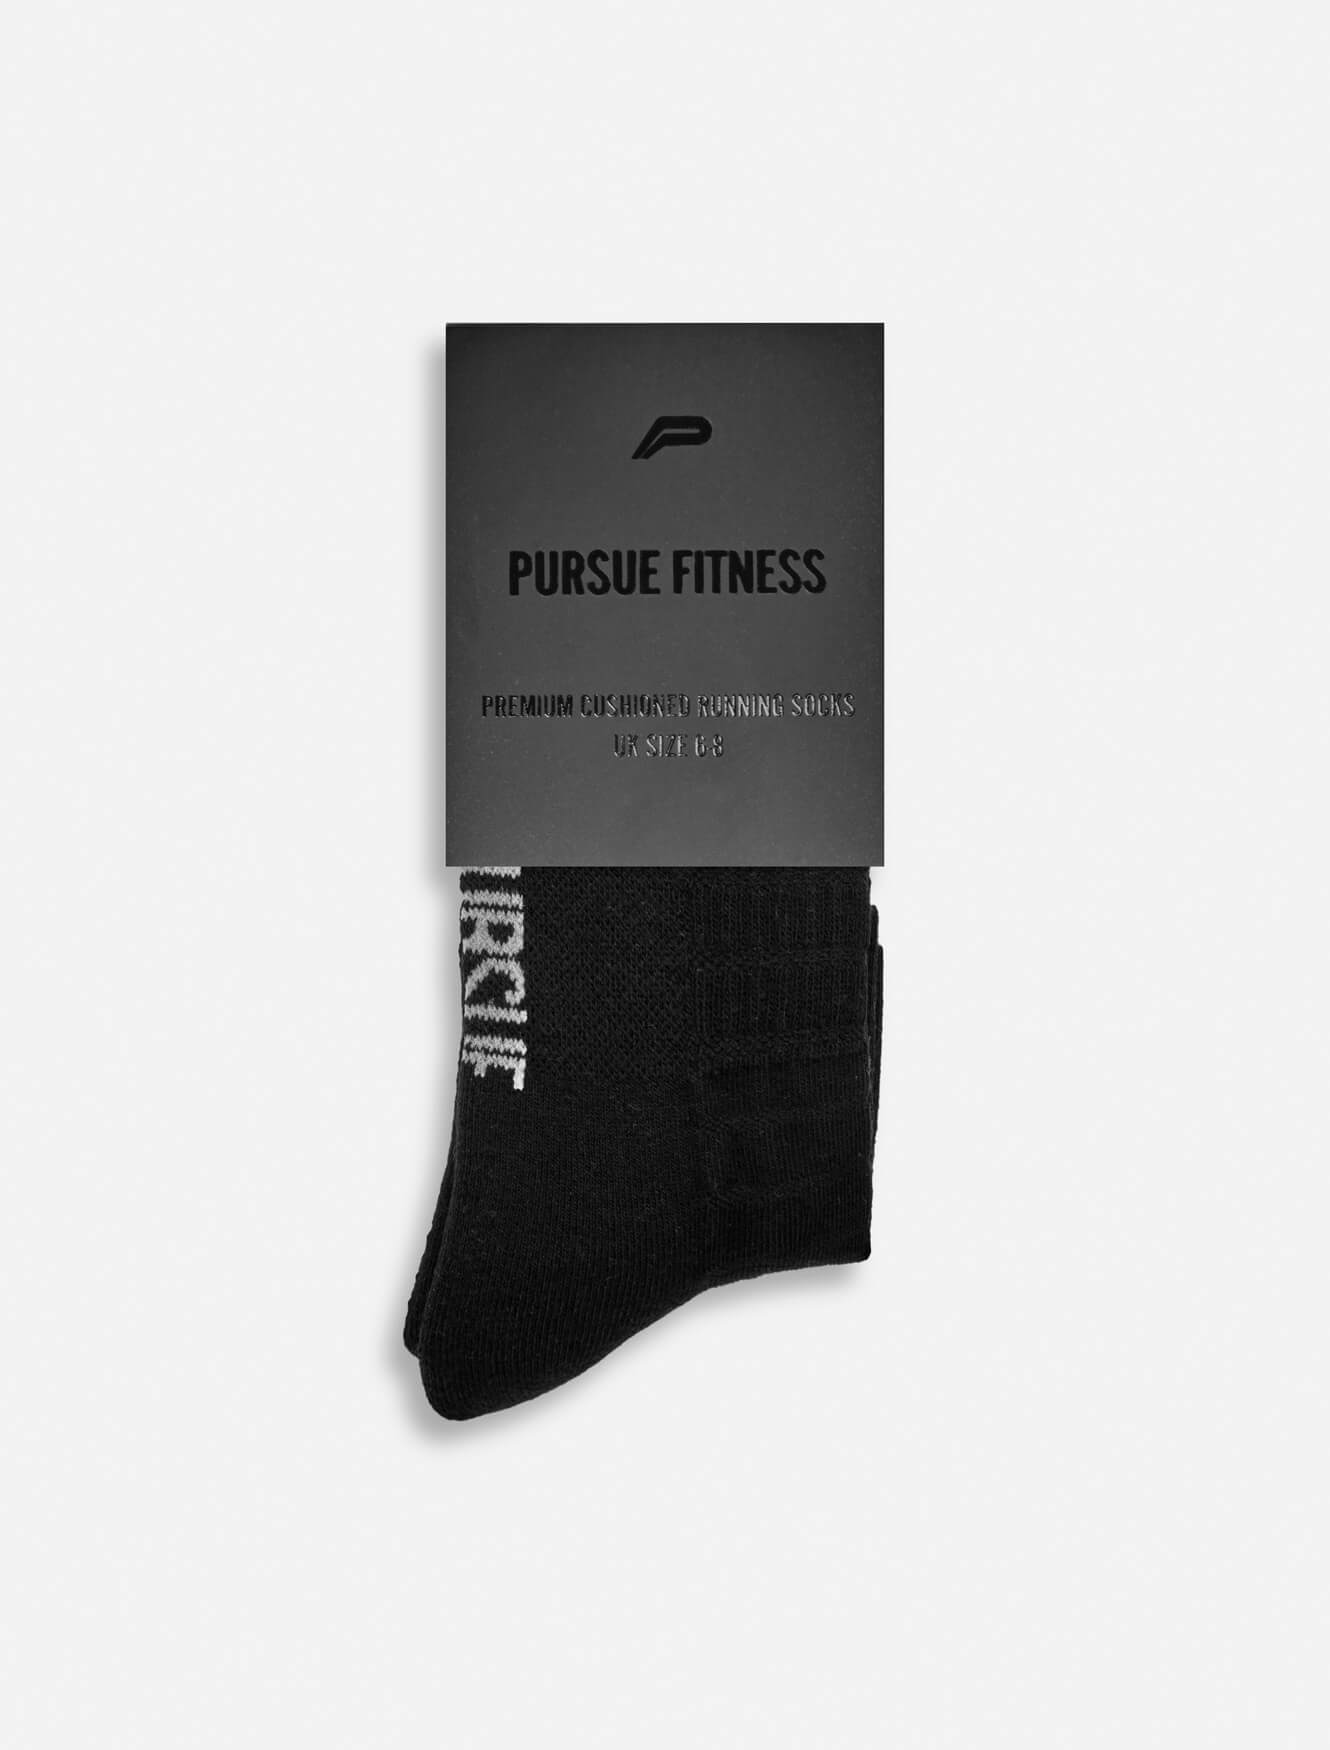 Premium Cushioned Running Socks / Black Pursue Fitness 5